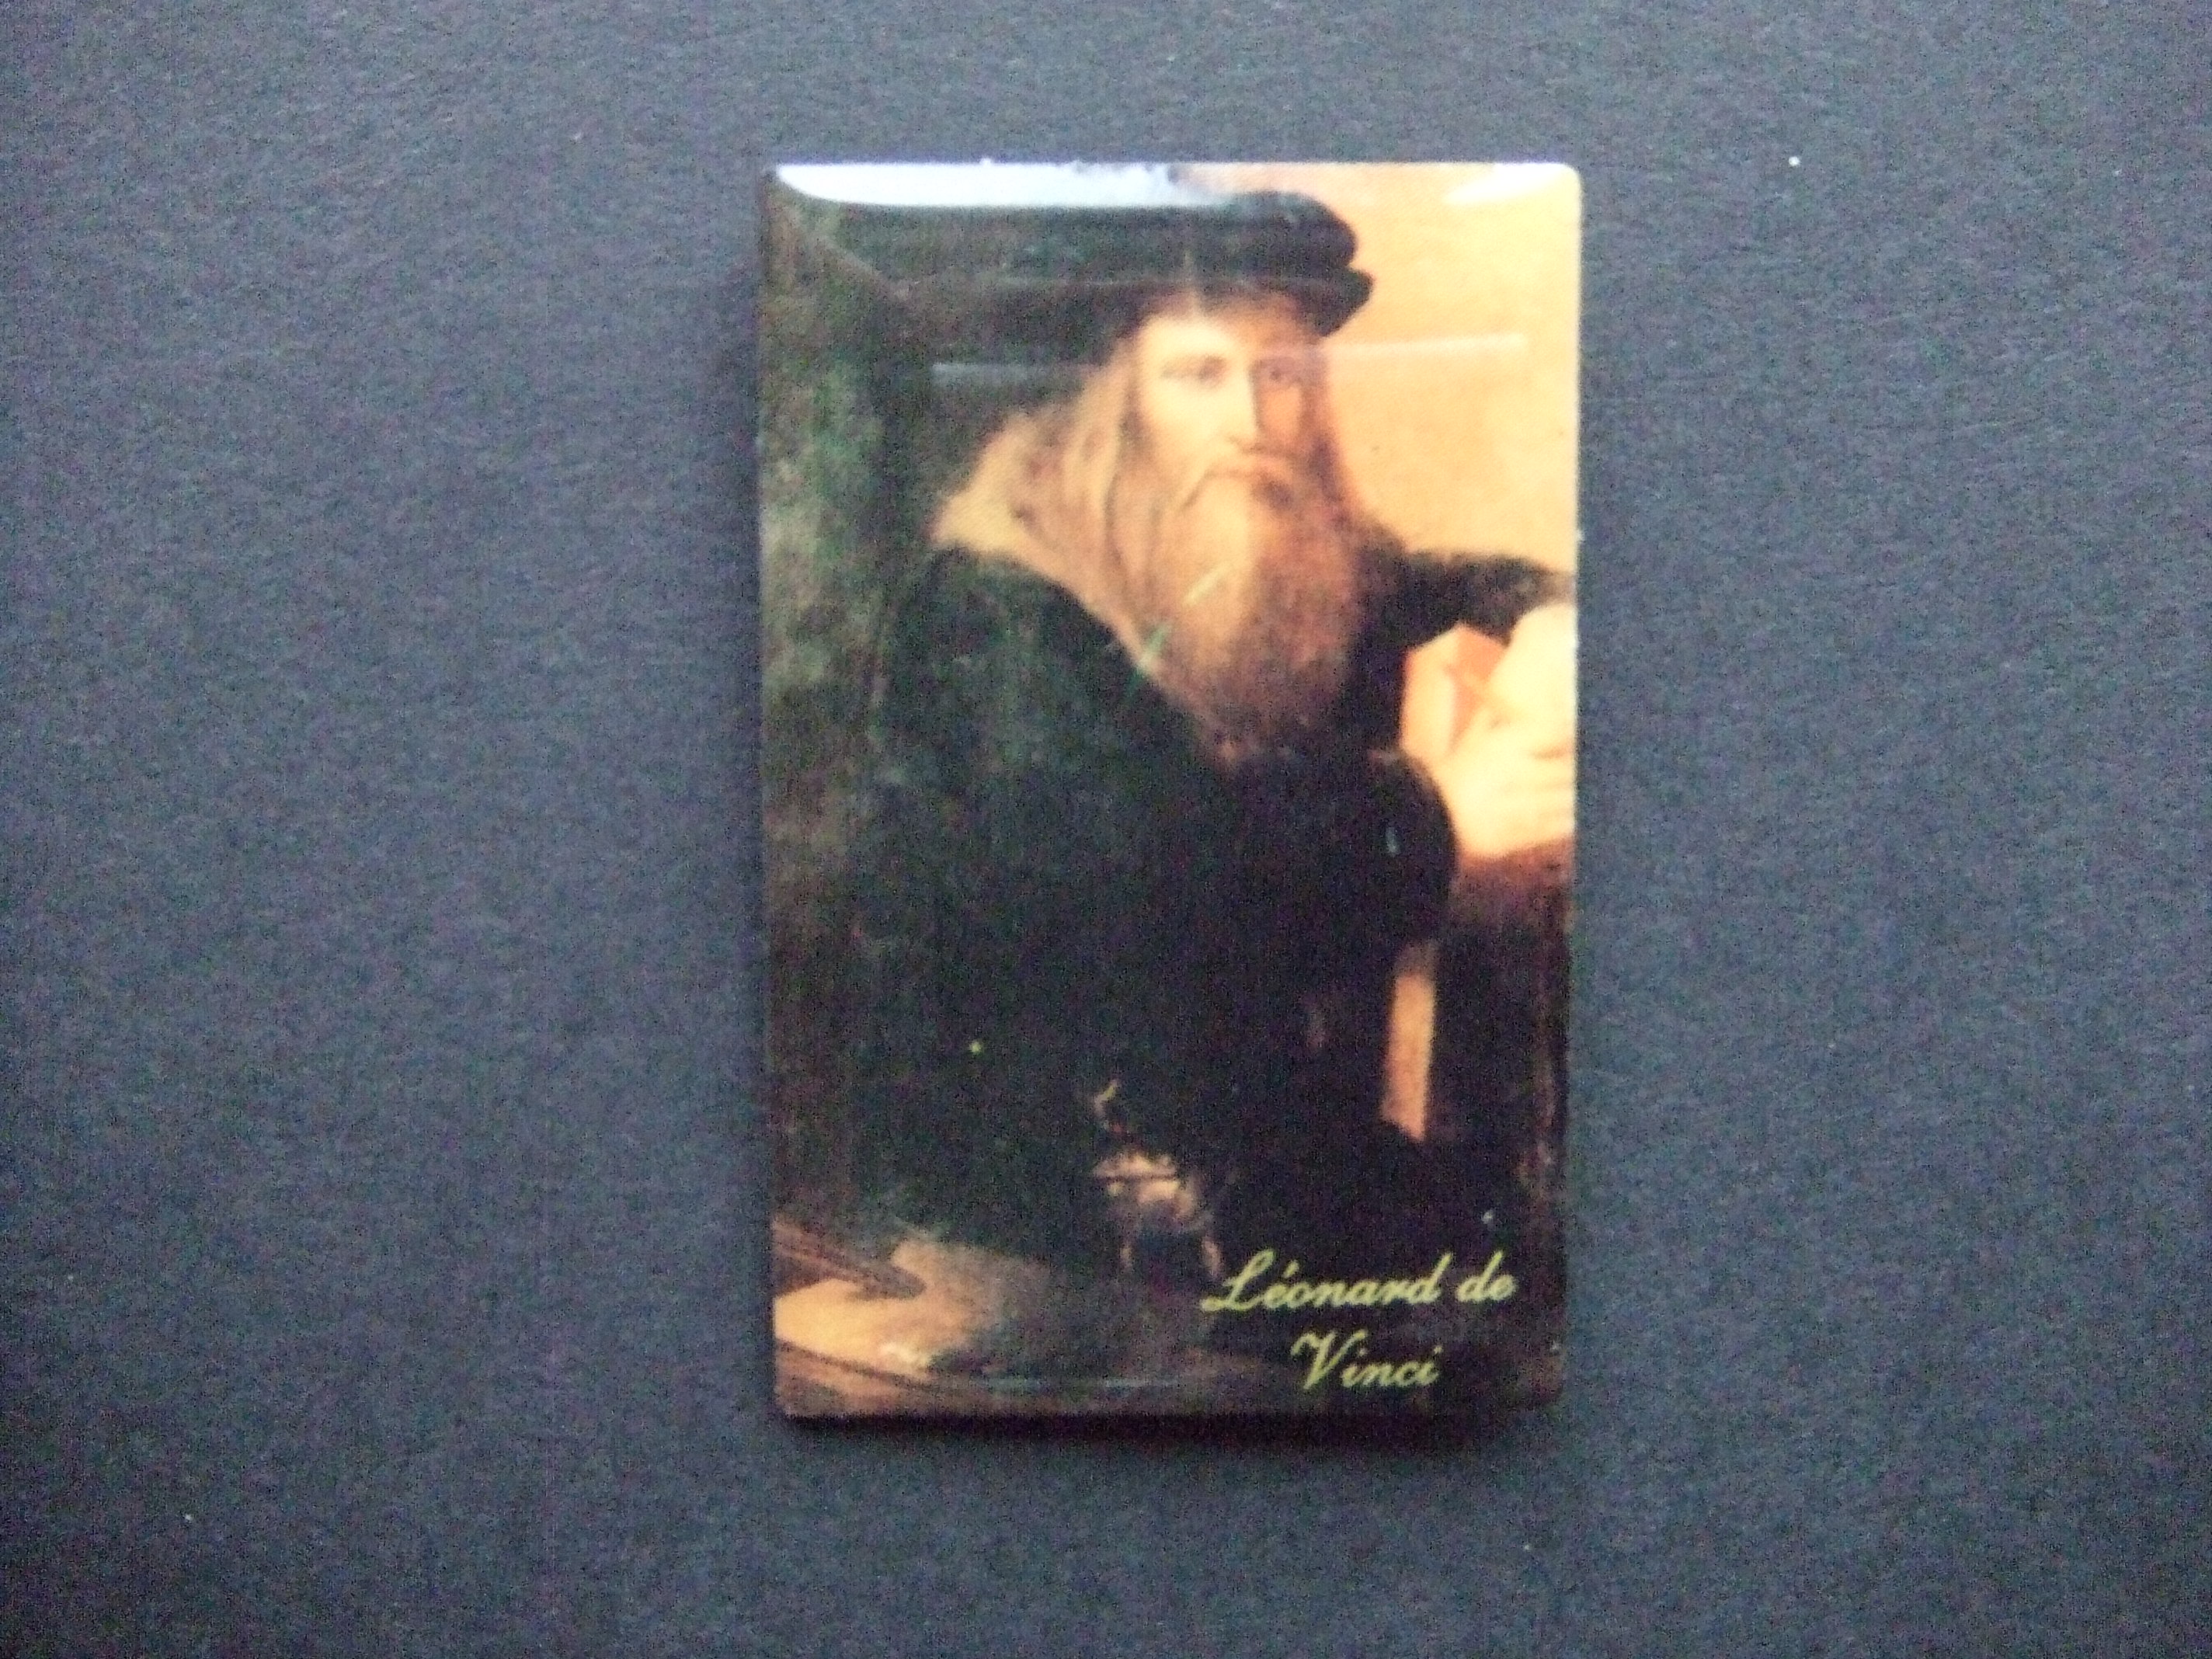 Leonardo Da Vinci filosoof, natuurkundige